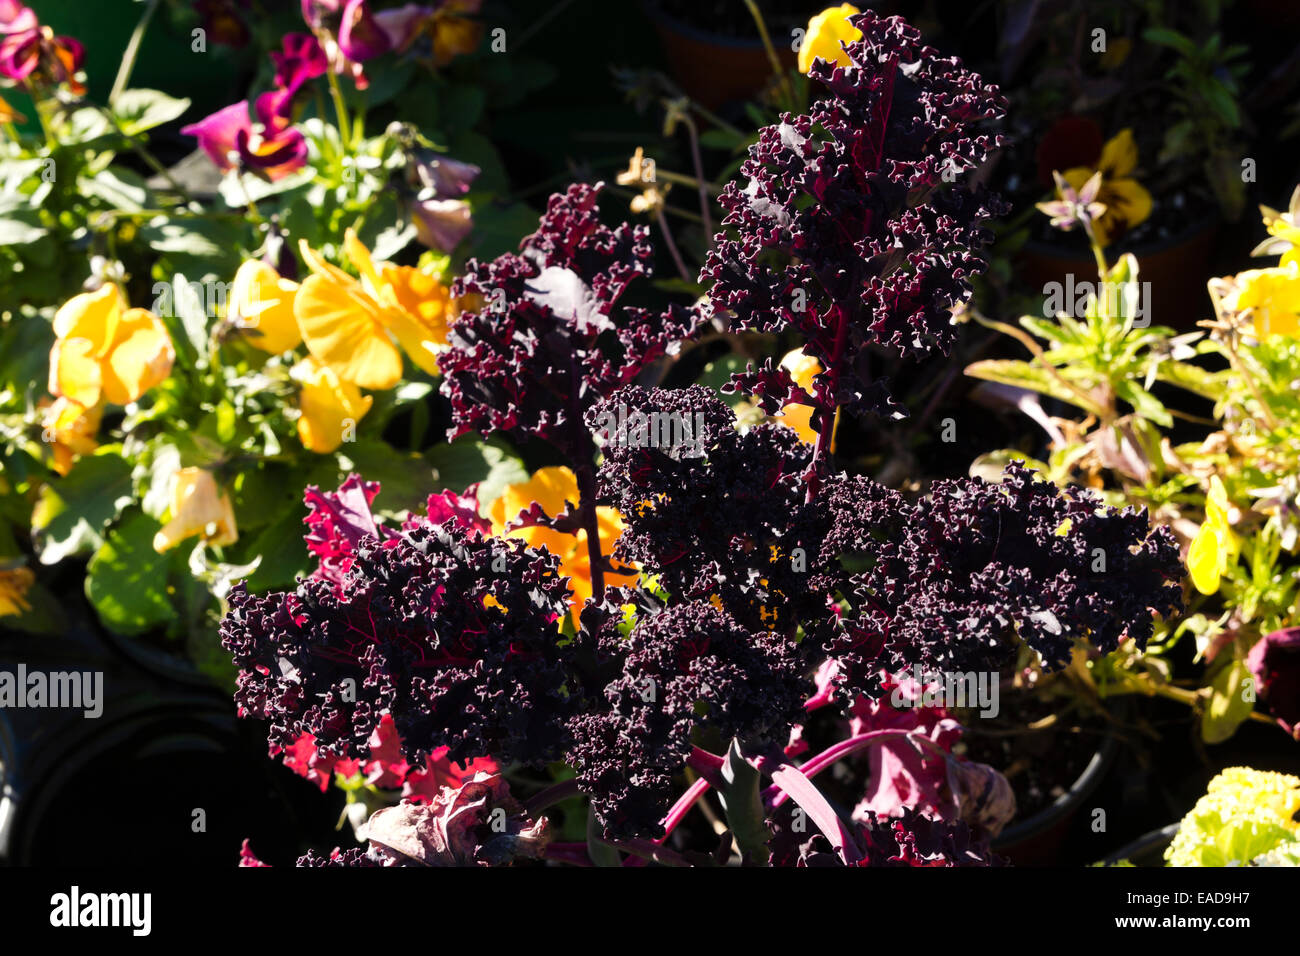 Kale comestible que crece en un jardín de flores. Foto de stock